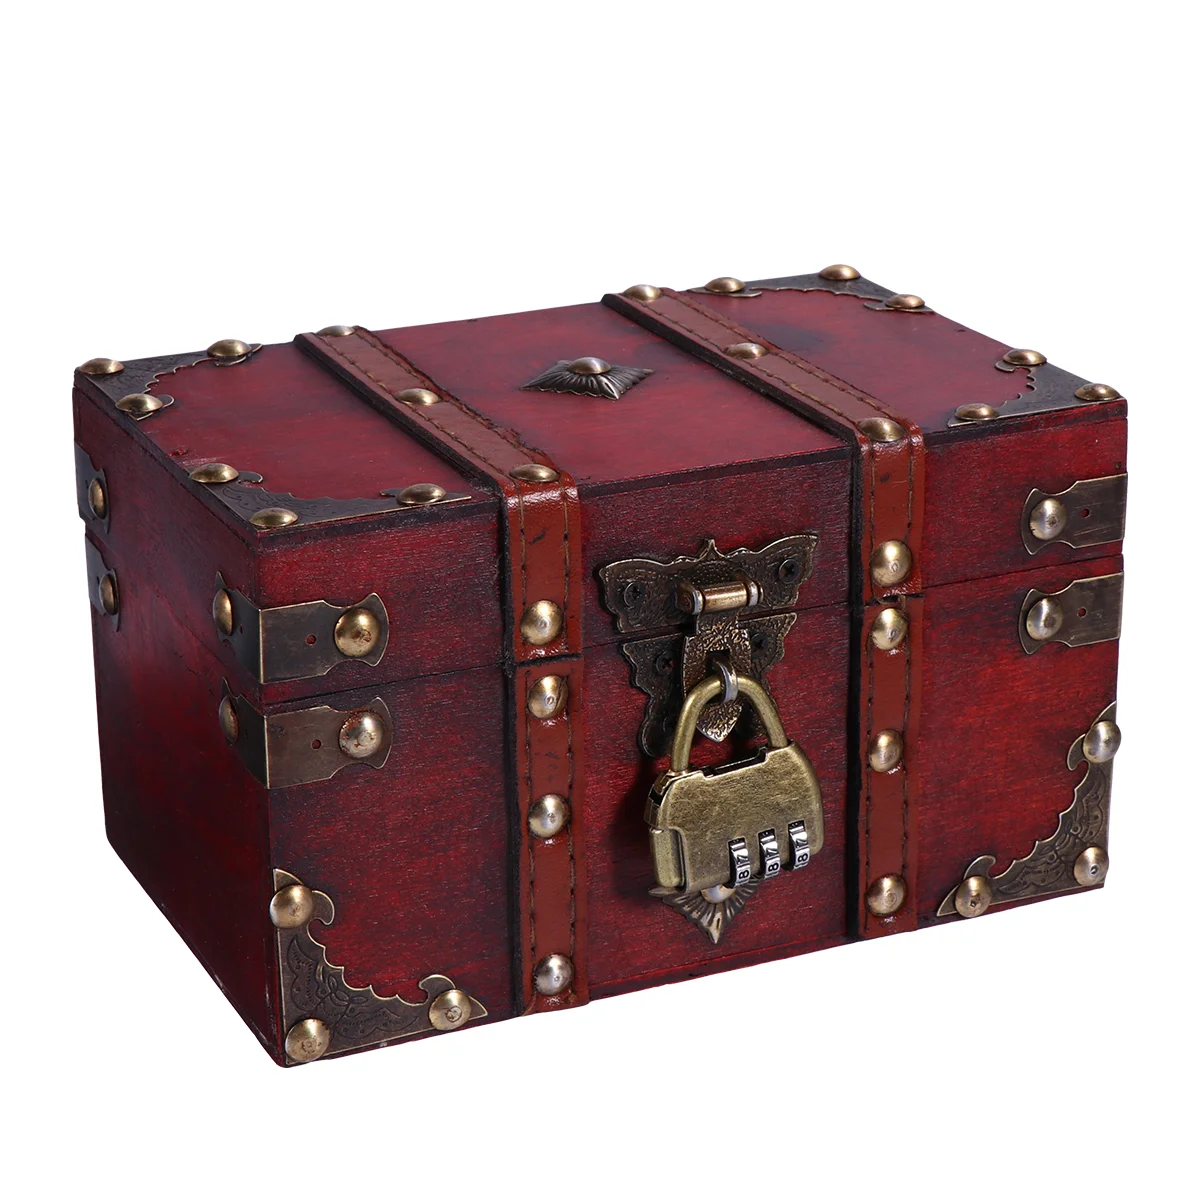 

Box Wooden Jewelry Treasurekeepsake Case Boxes Trinket Storage Organizer Vintagelarge Wood Lockcontainer Home Decorative Trunks